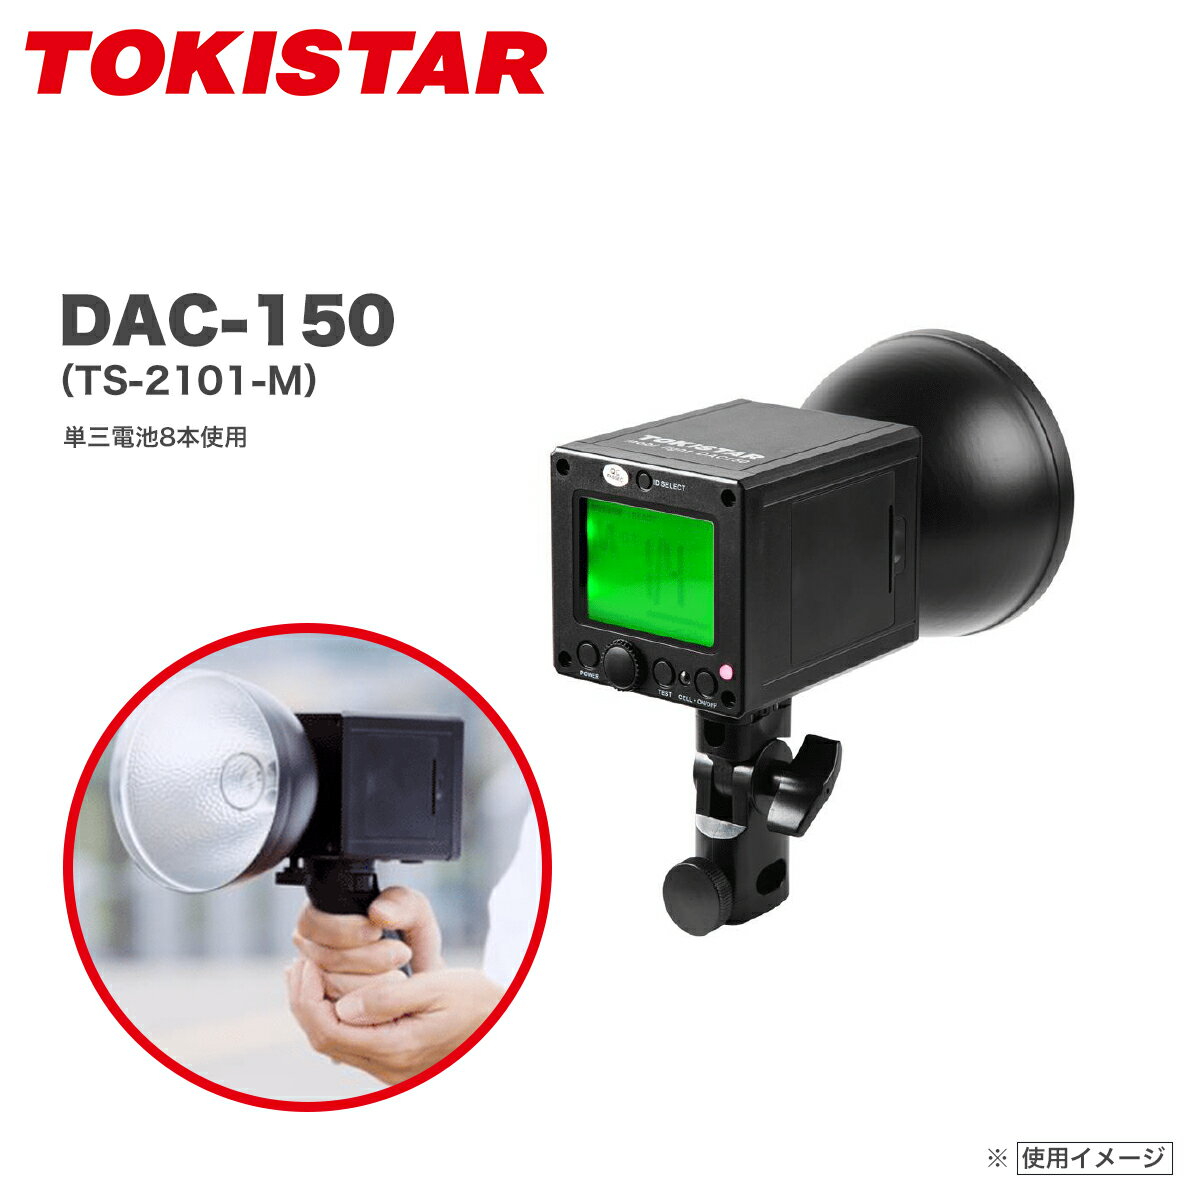 TOKISTAR(トキスター) TS-2101-M mobi light DAC150 モノブロックストロボ※